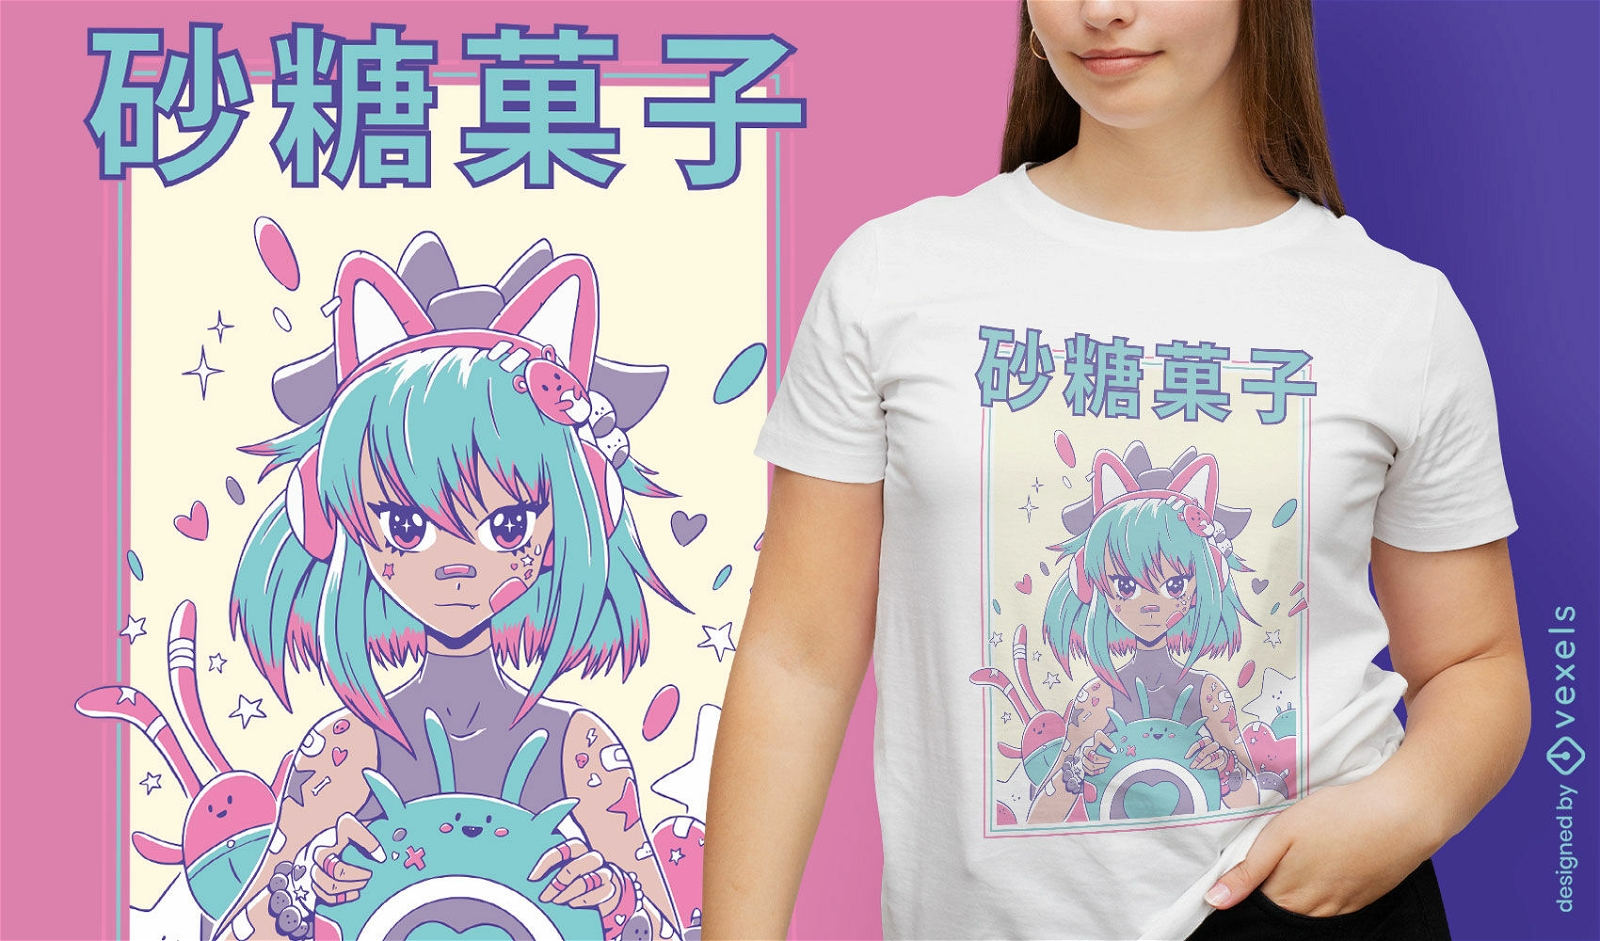 NEW LIMITED Anime Girl Kawaii Waifu Pink Aesthetic Japanese Gift T-Shirt  S-3XL | eBay